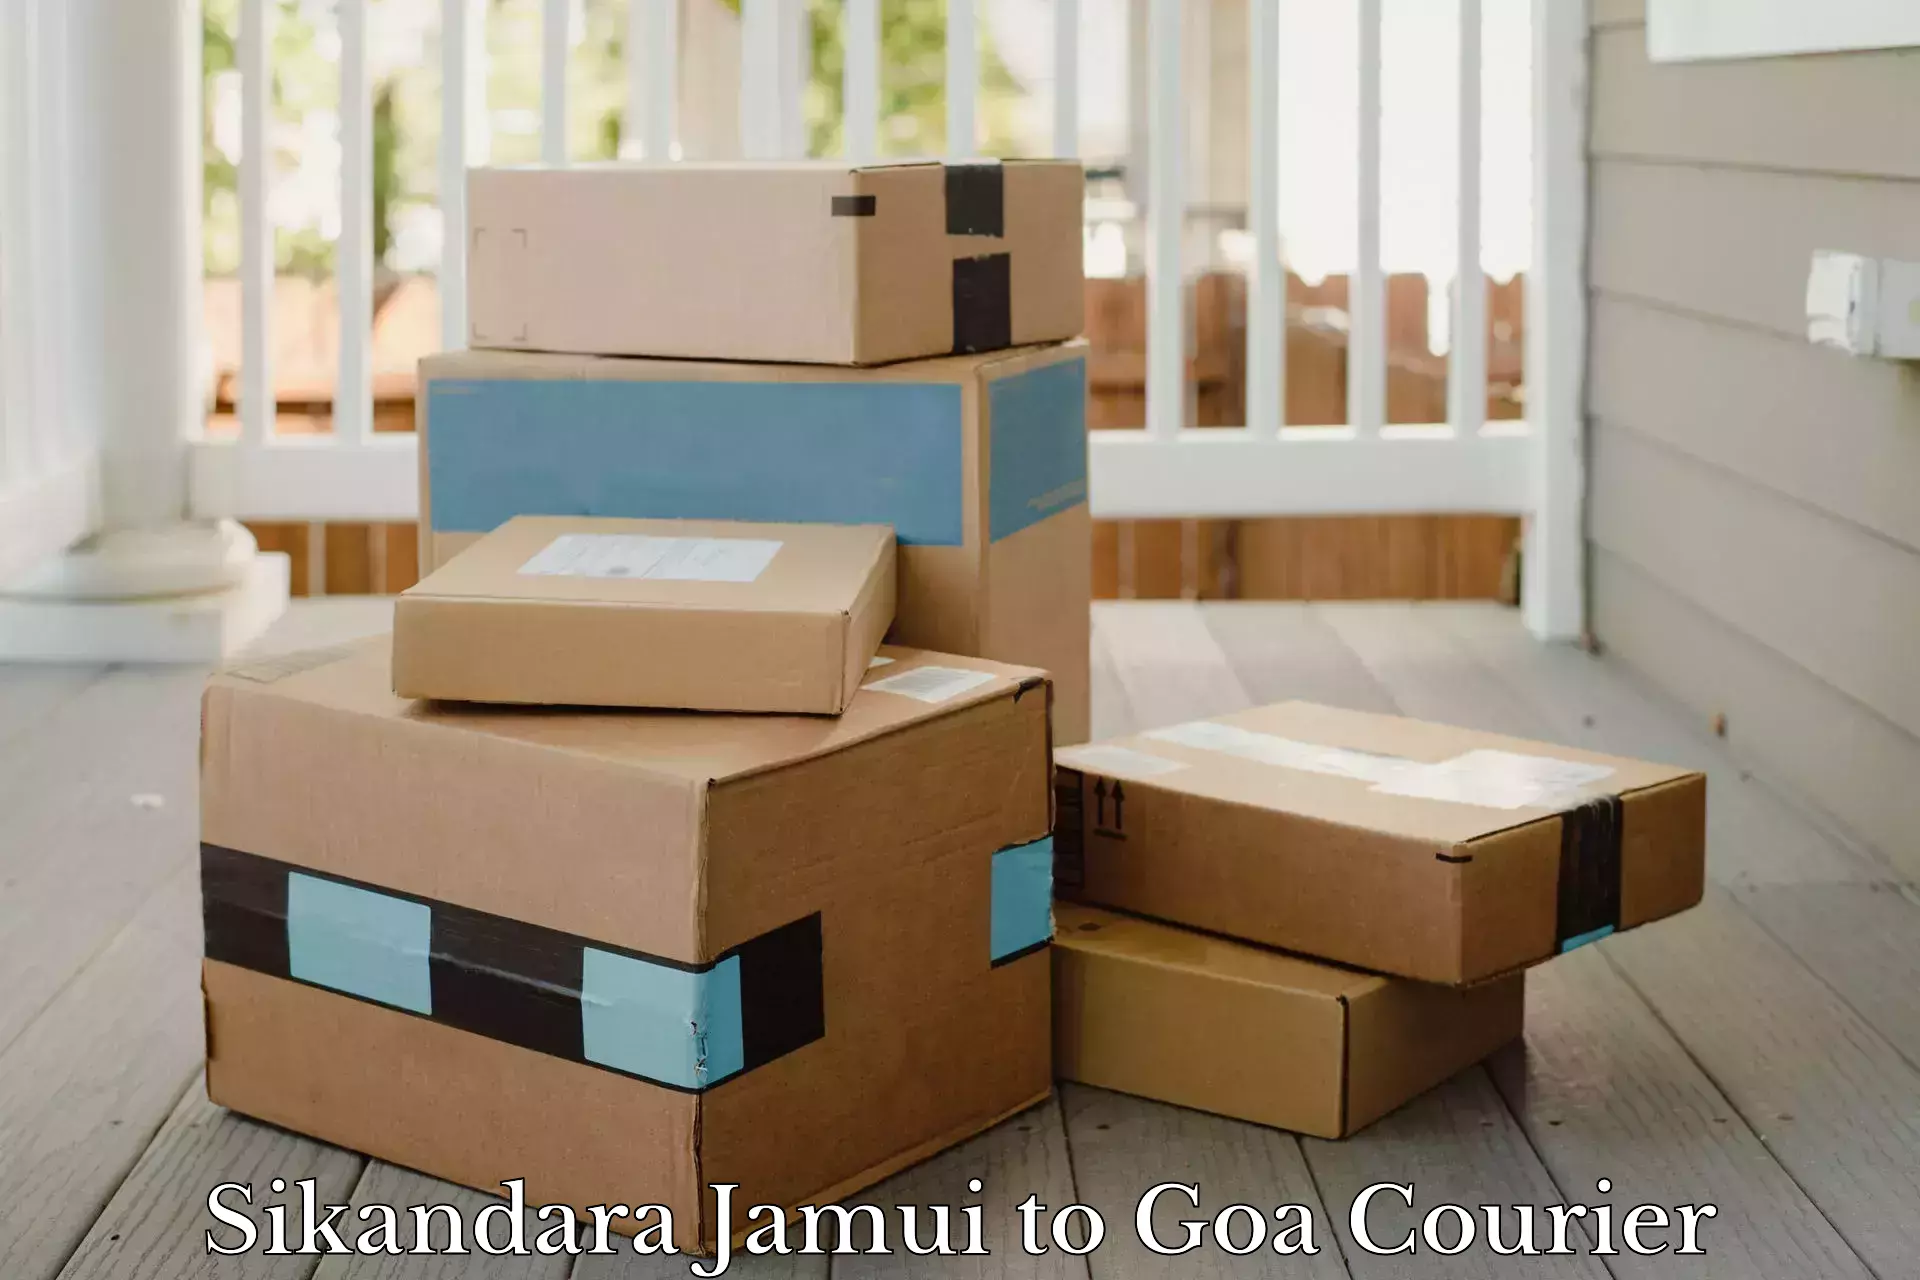 Cargo delivery service Sikandara Jamui to Goa